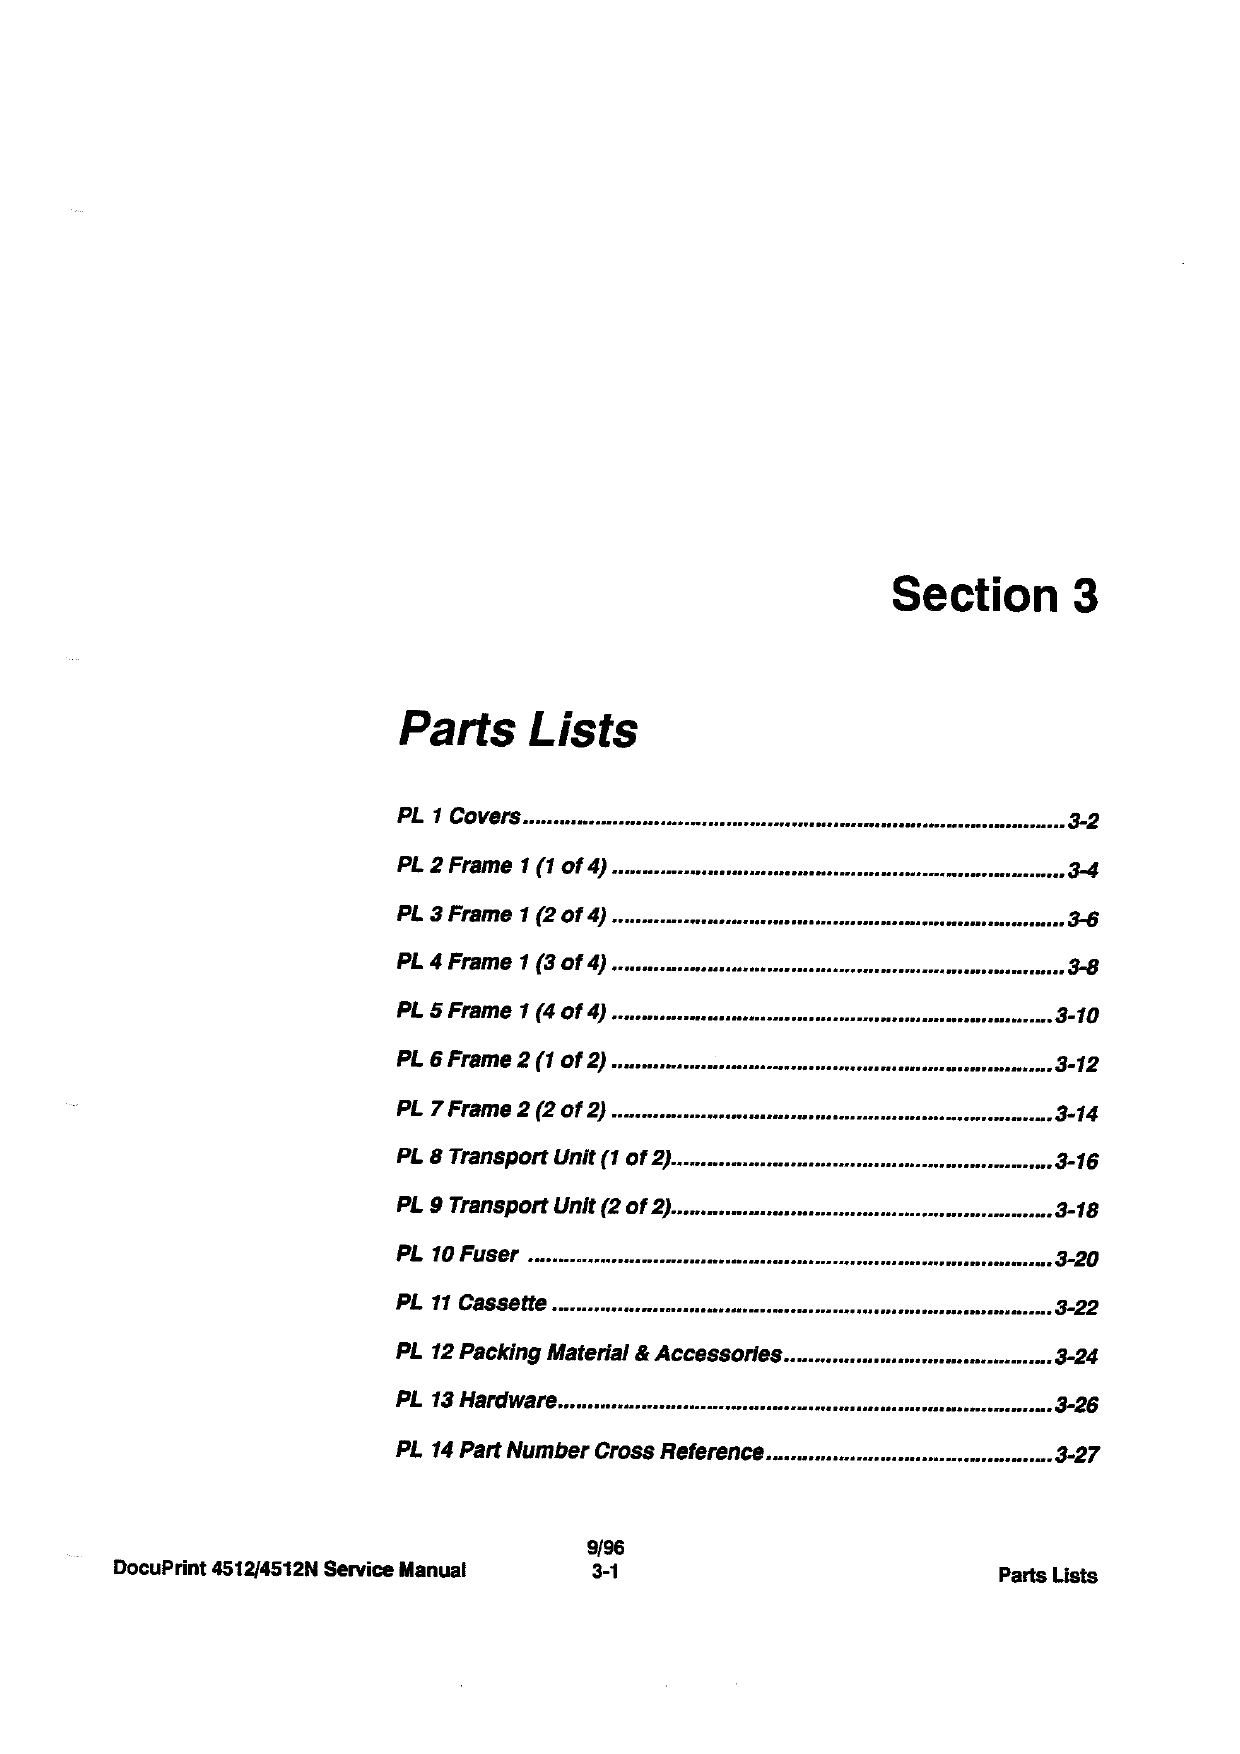 Xerox DocuPrint 4512 Parts List and Service Manual-1